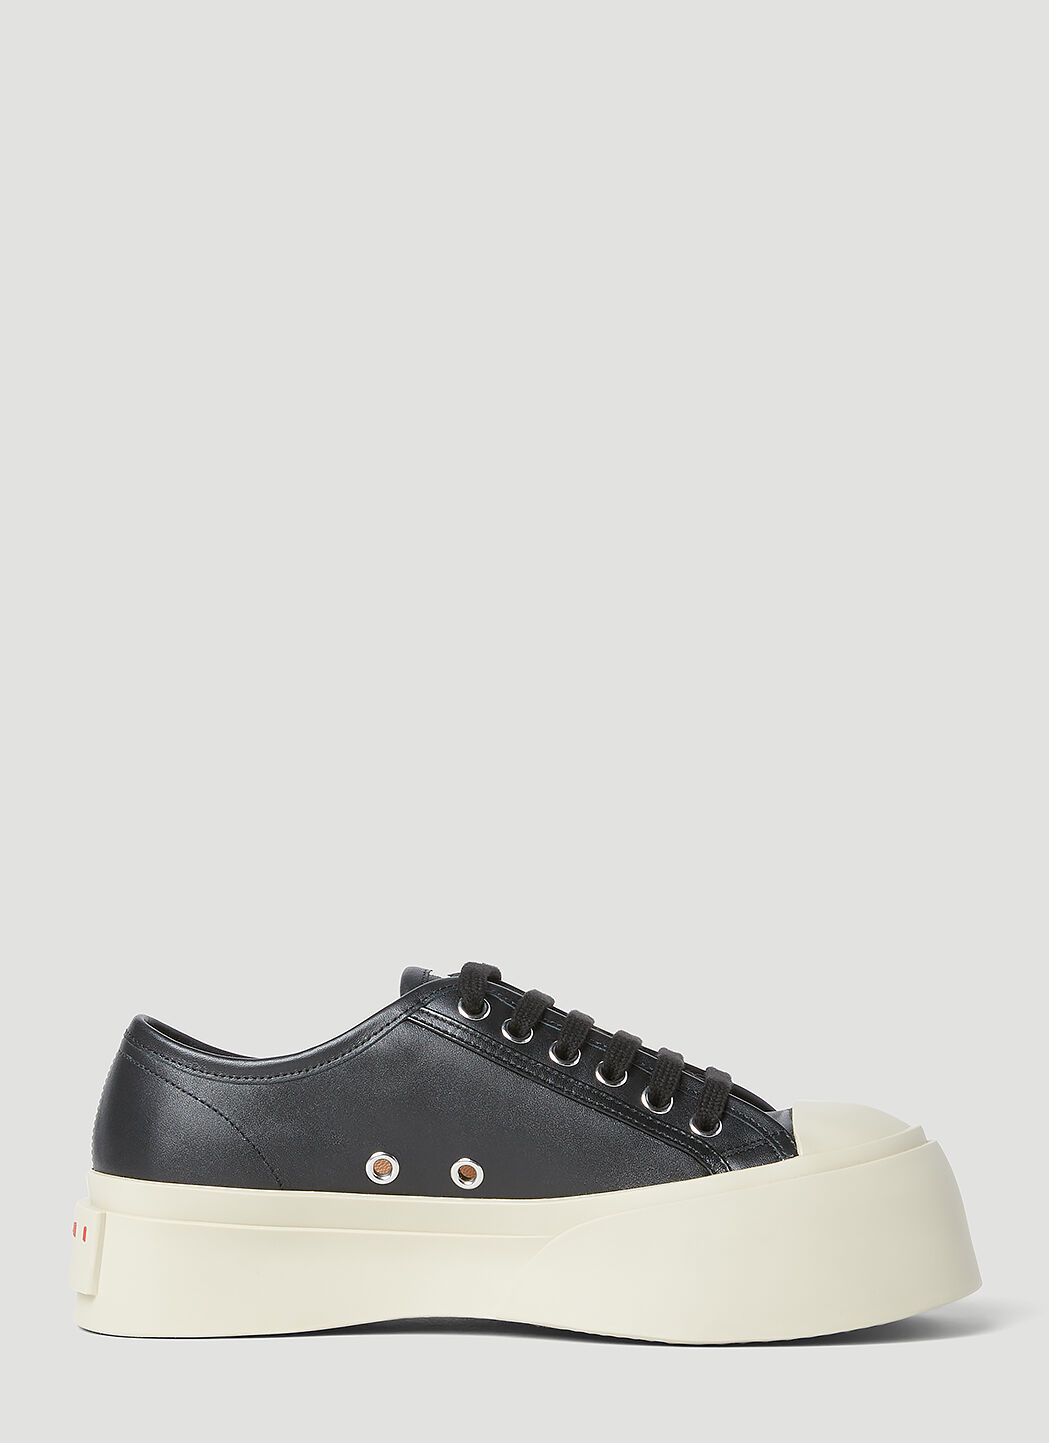 Marni Leather Pablo Sneakers Black mni0257019